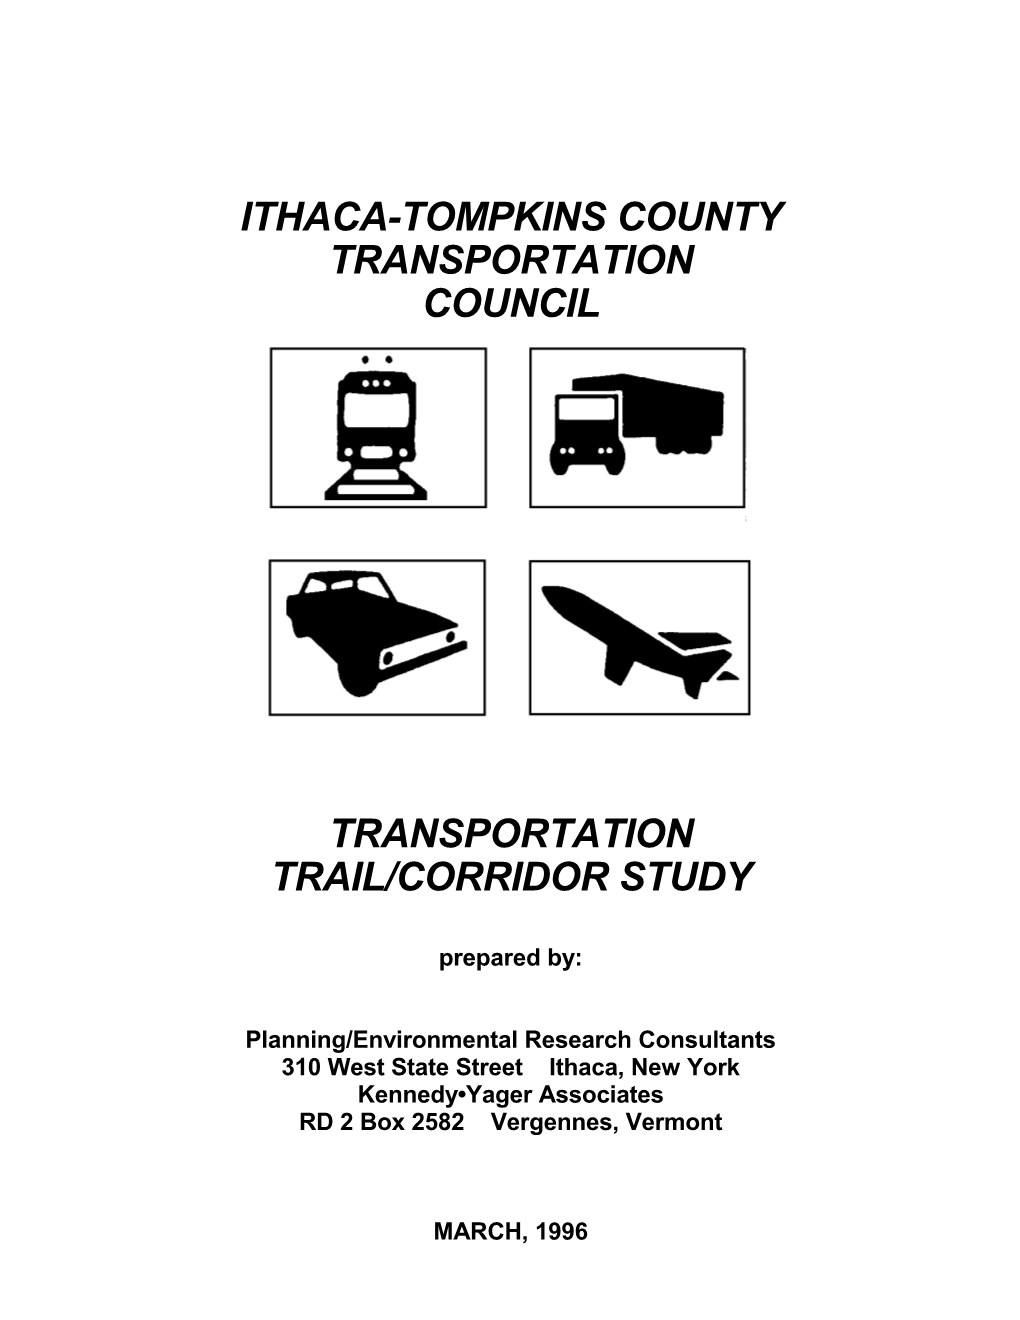 Ithaca-Tompkins County Transportation Council Transportation Trail/Corridor Study